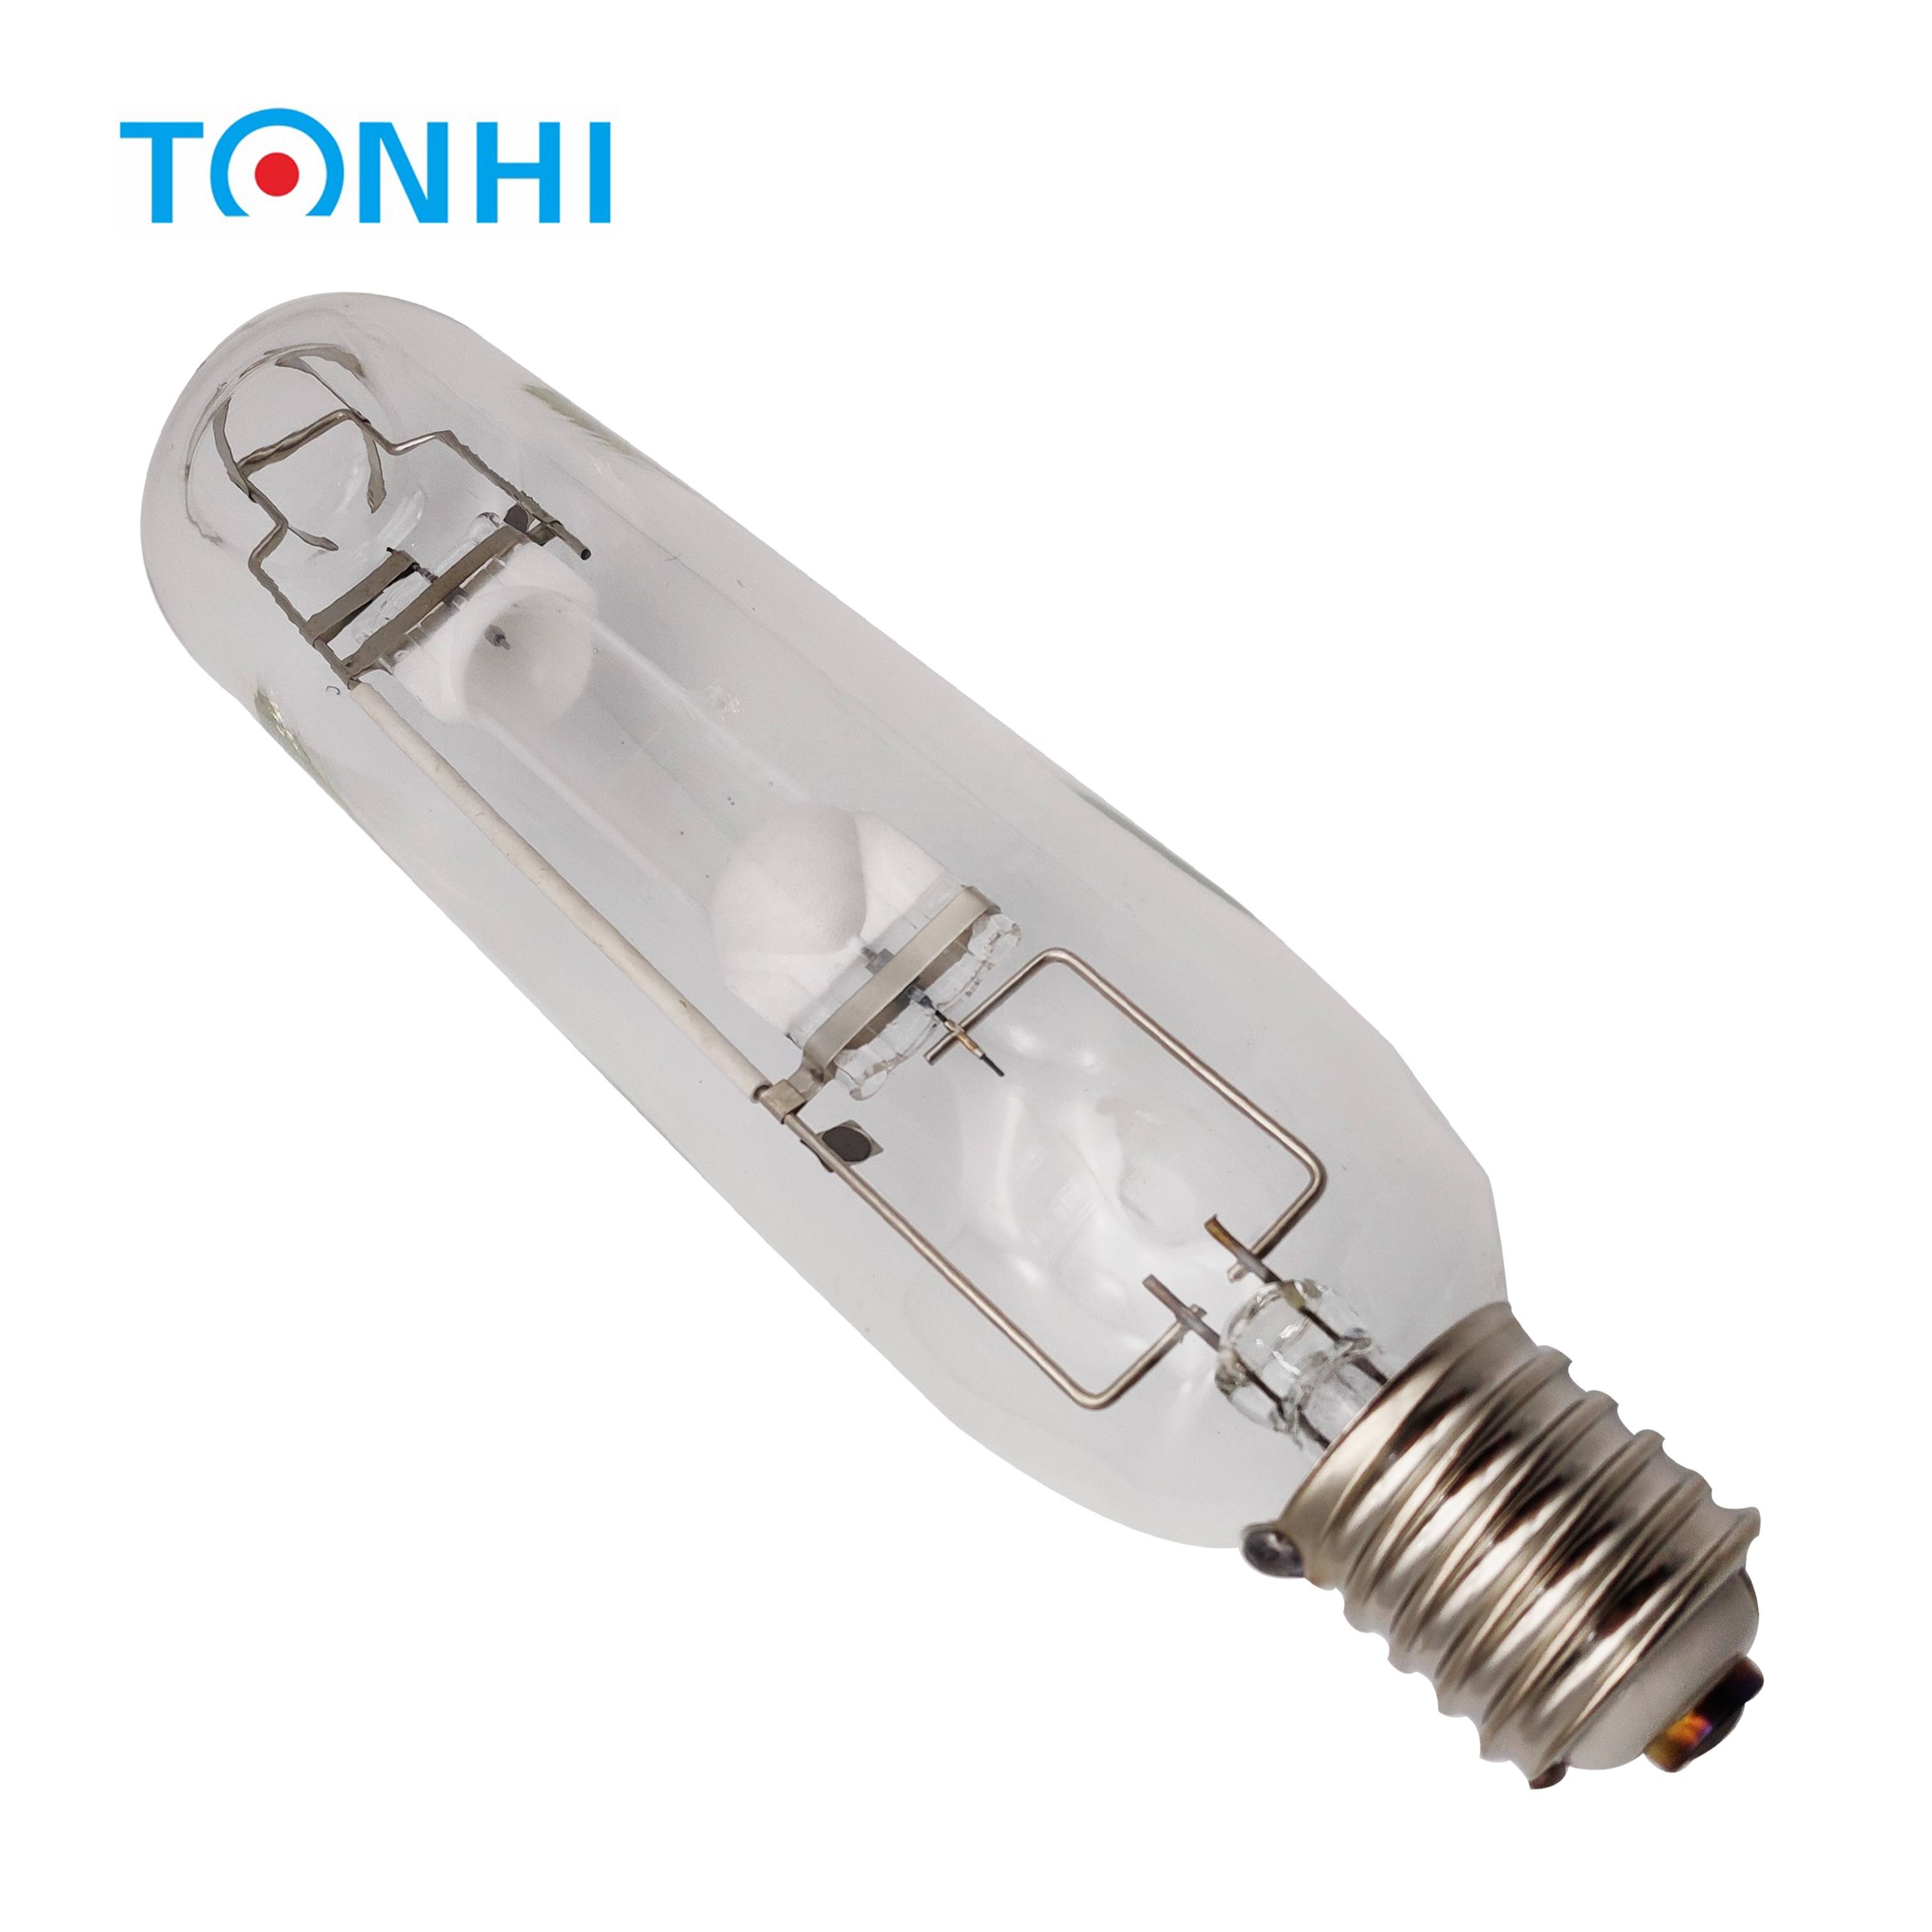 1000W TT76 Metal Halide Lamp